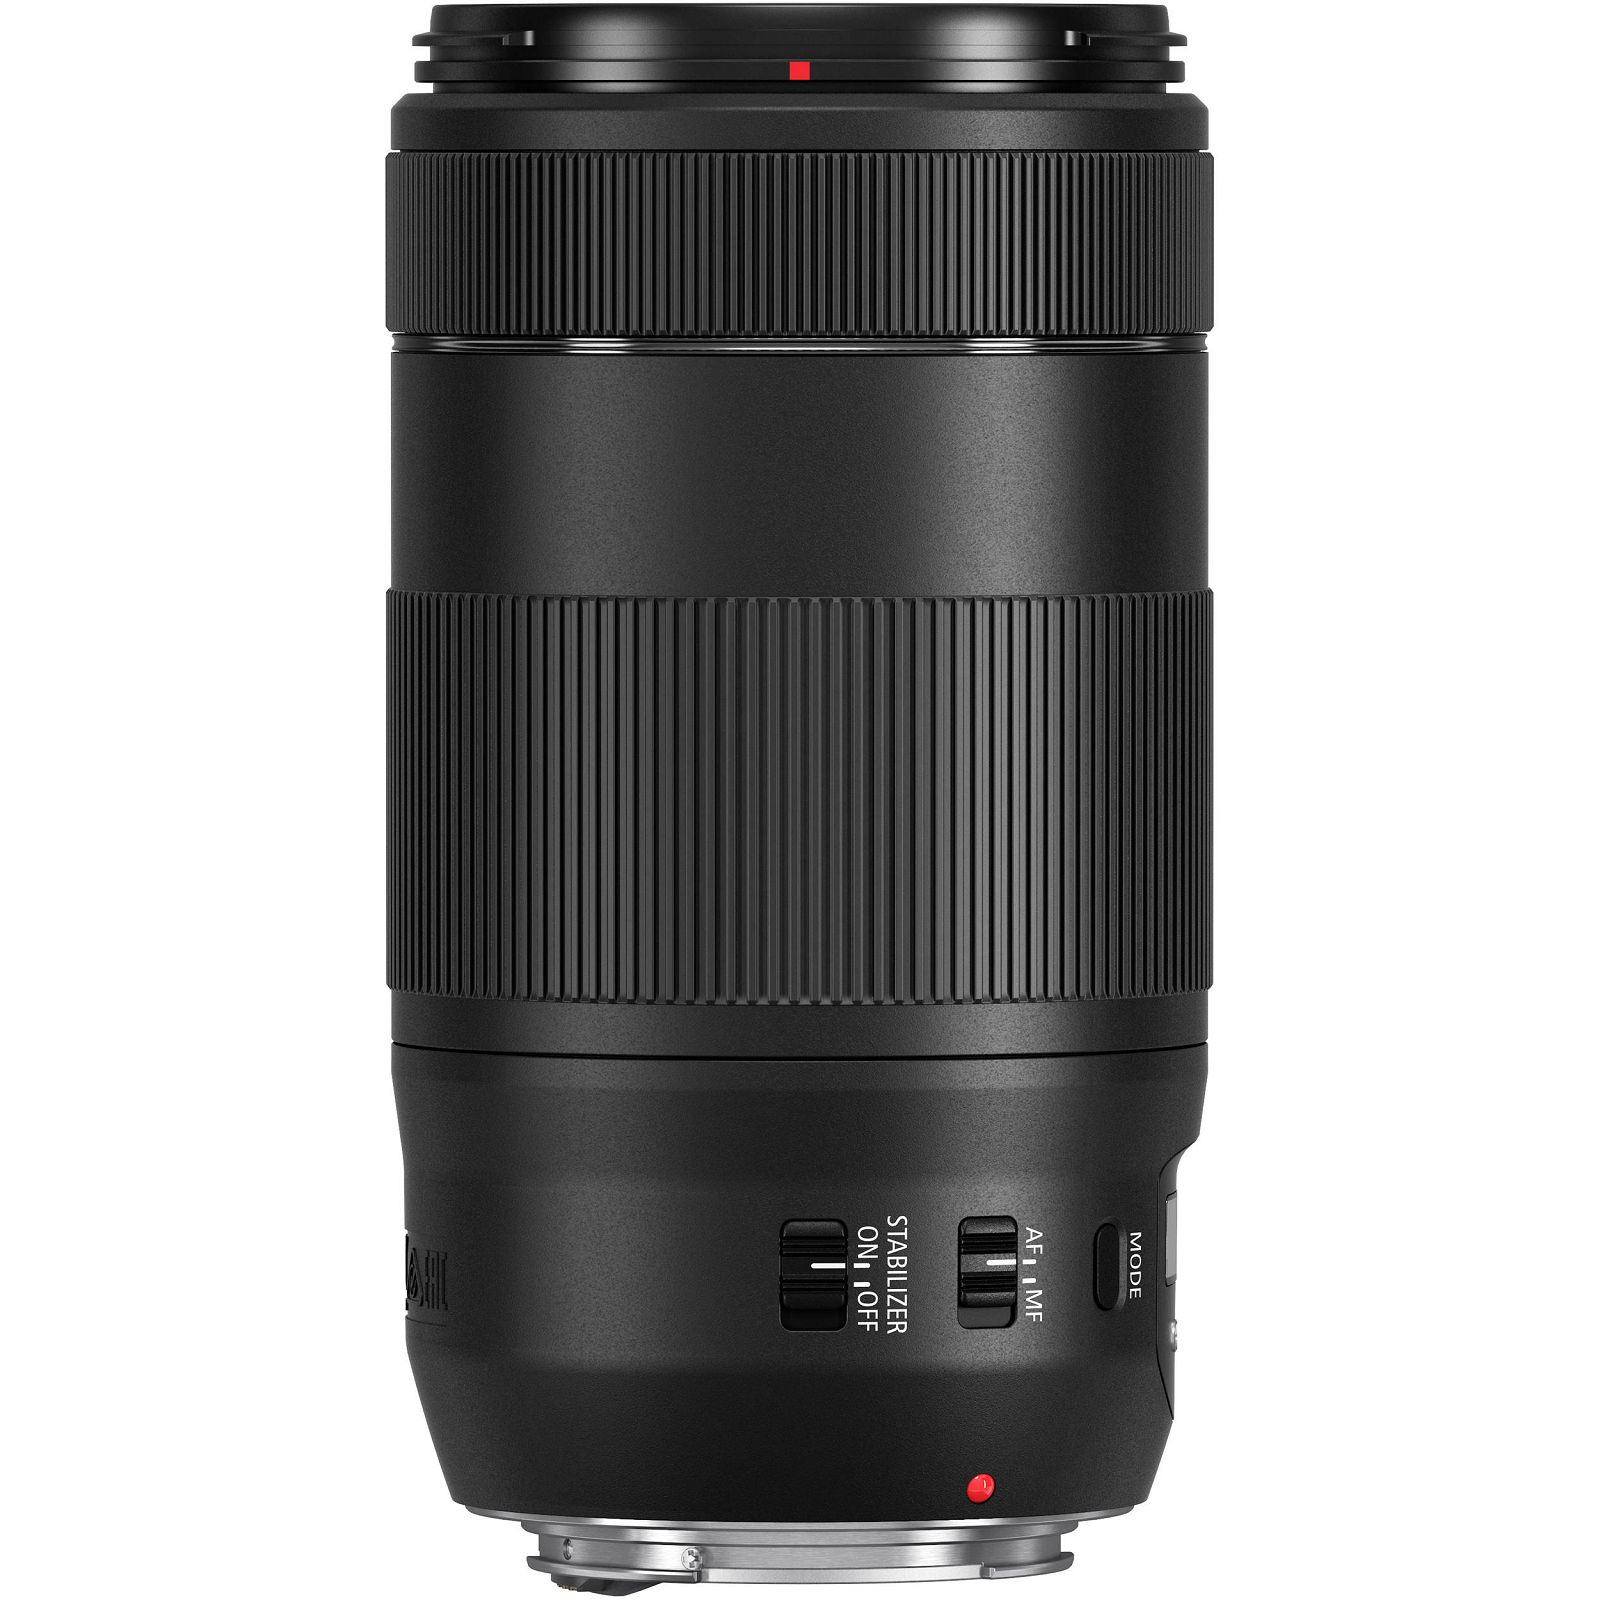 Canon EF 70-300mm f/4-5.6 IS II USM telefoto objektiv 70-300 4-5.6 zoom lens (0571C005AA)